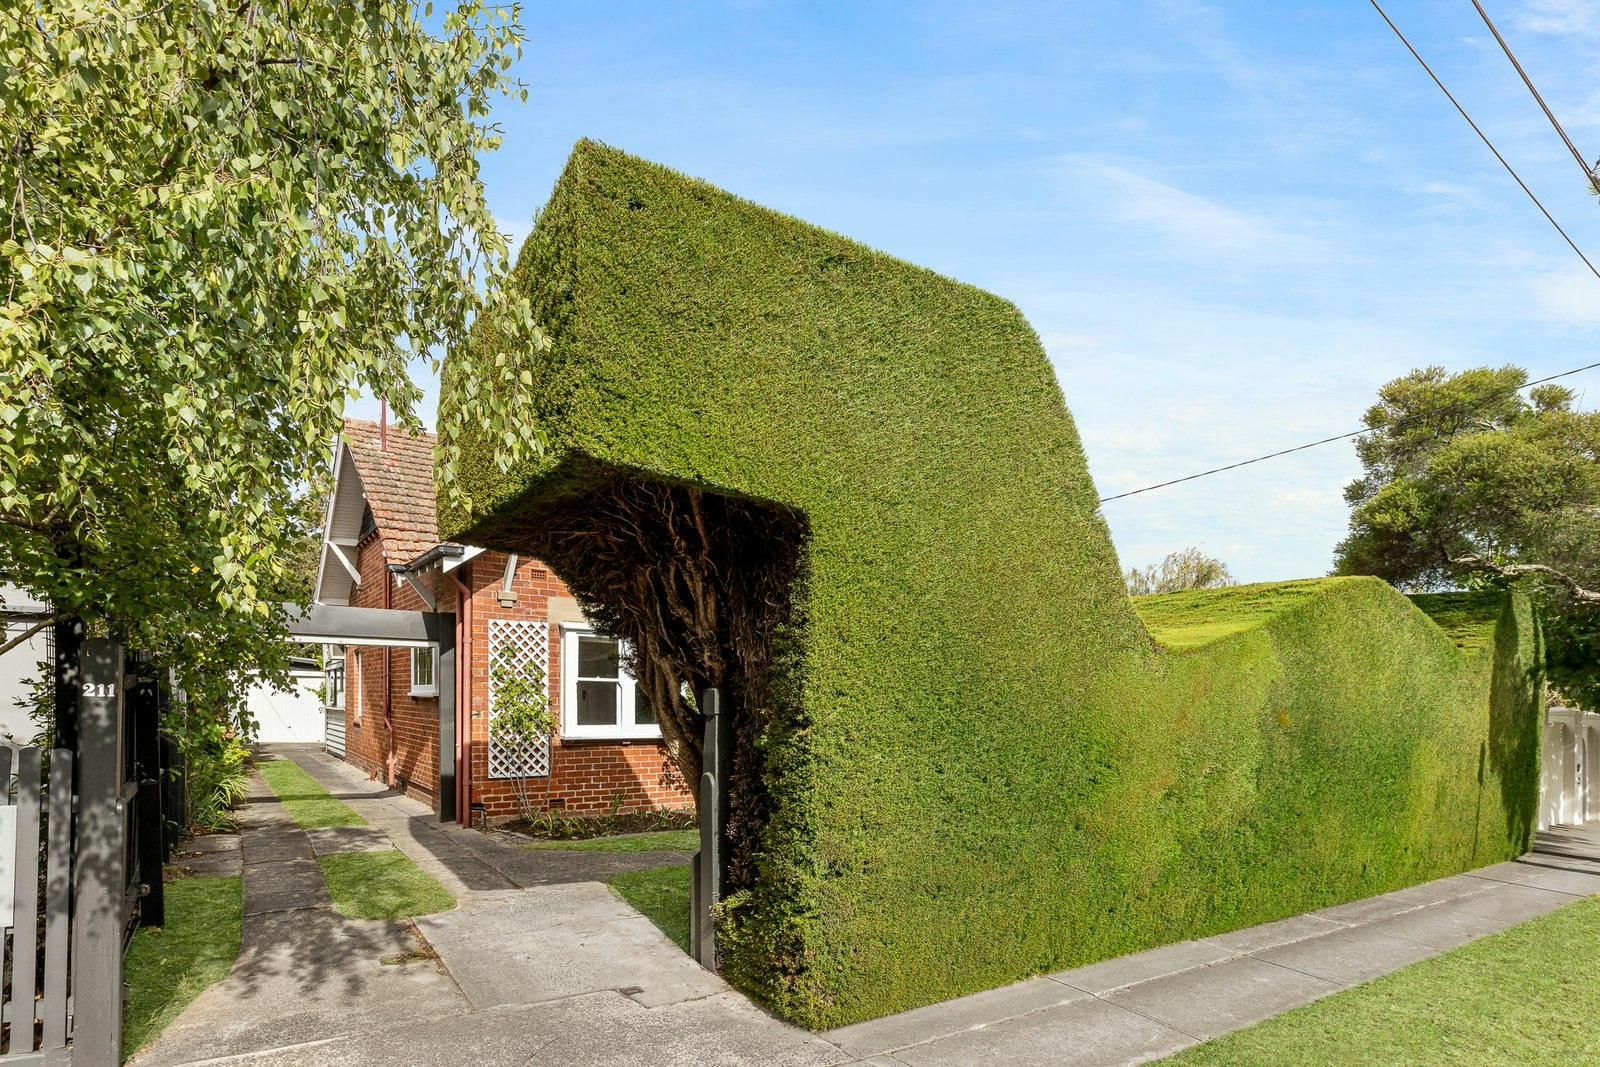 Image of hedge